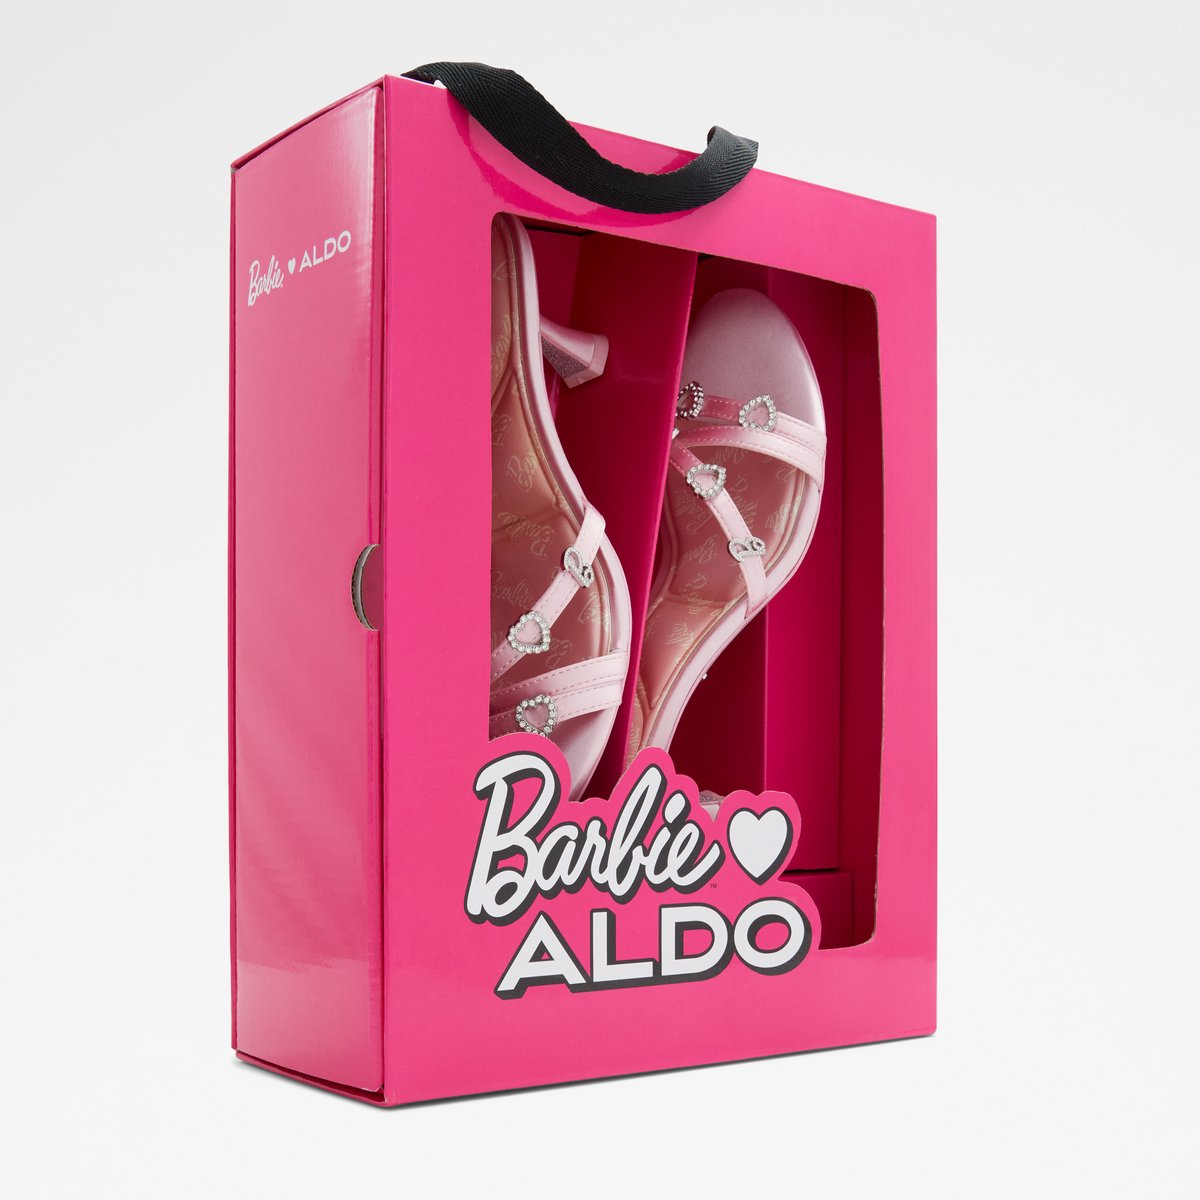 Barbiemule Women Shoes - Medium Pink - ALDO KSA